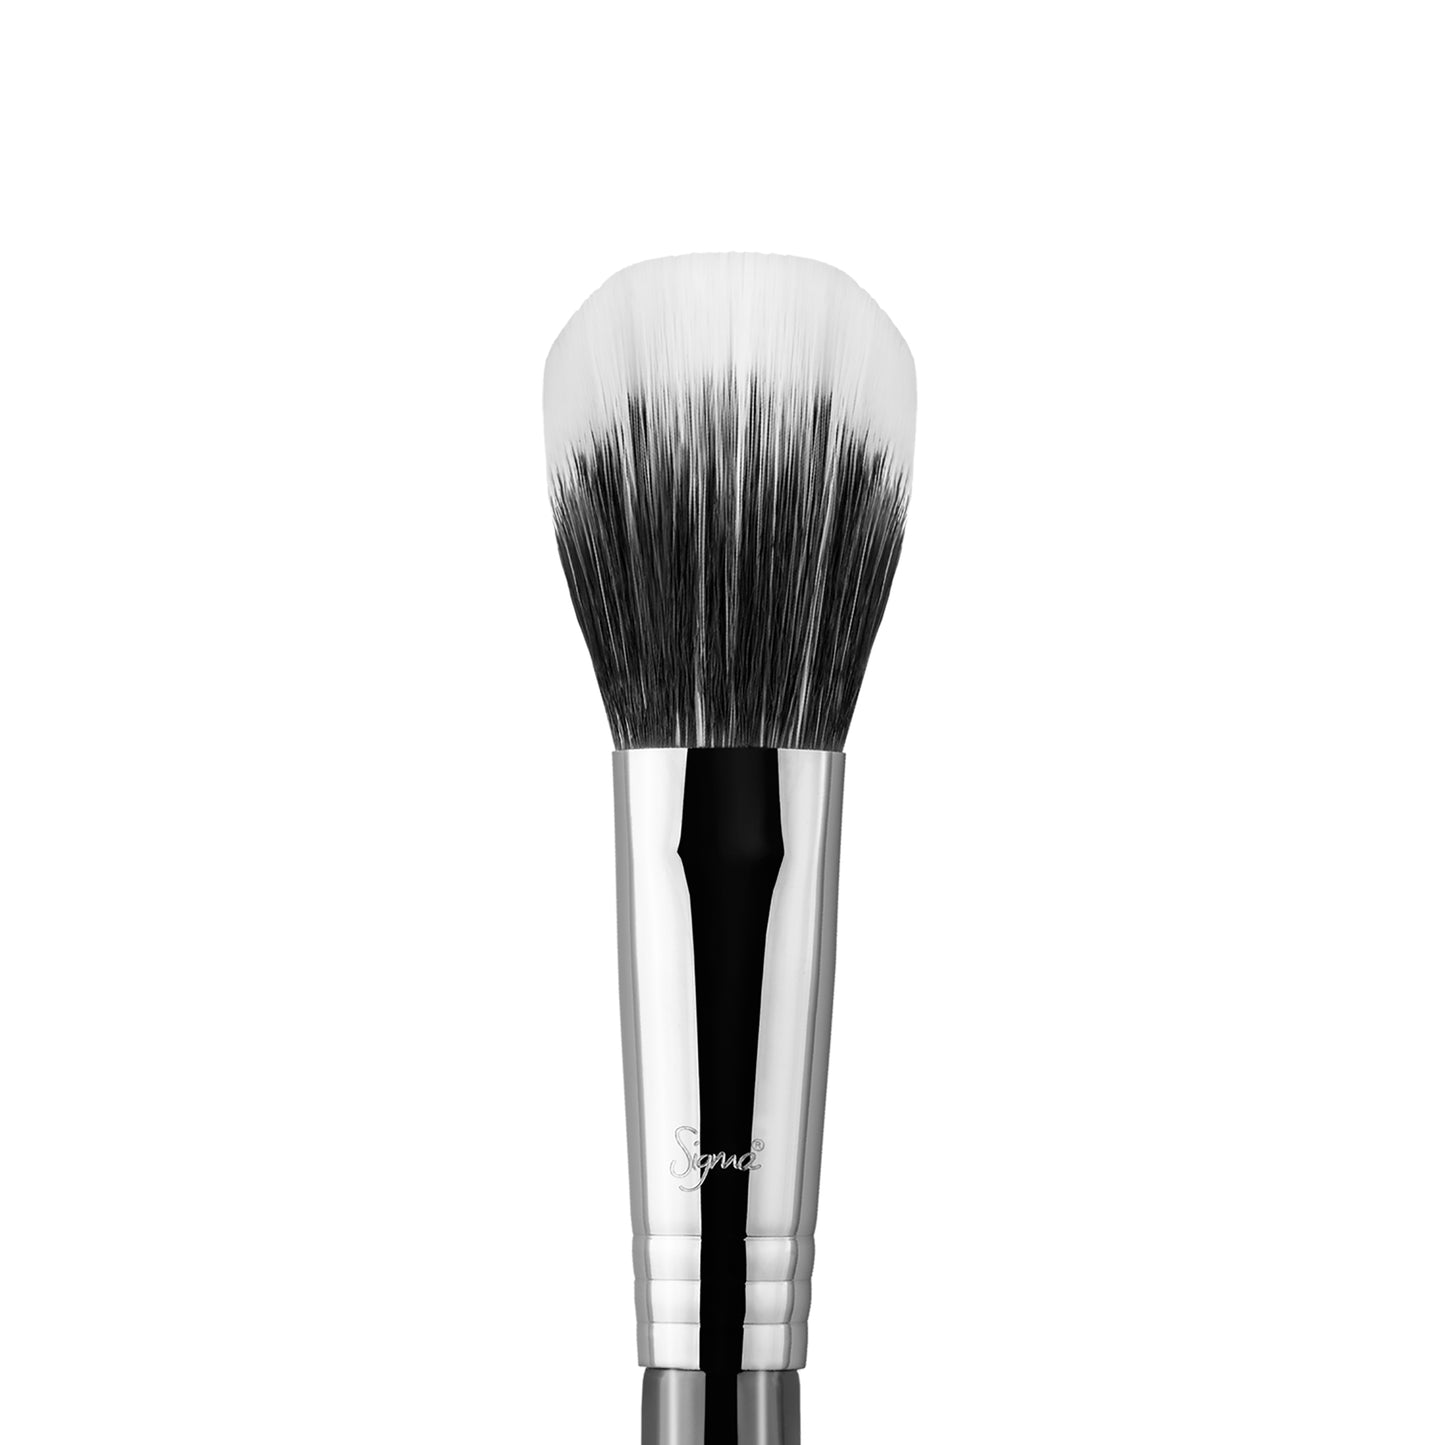 Sigma Beauty F15 Duo Fibre Powder/Blush Brush - Black/Chrome